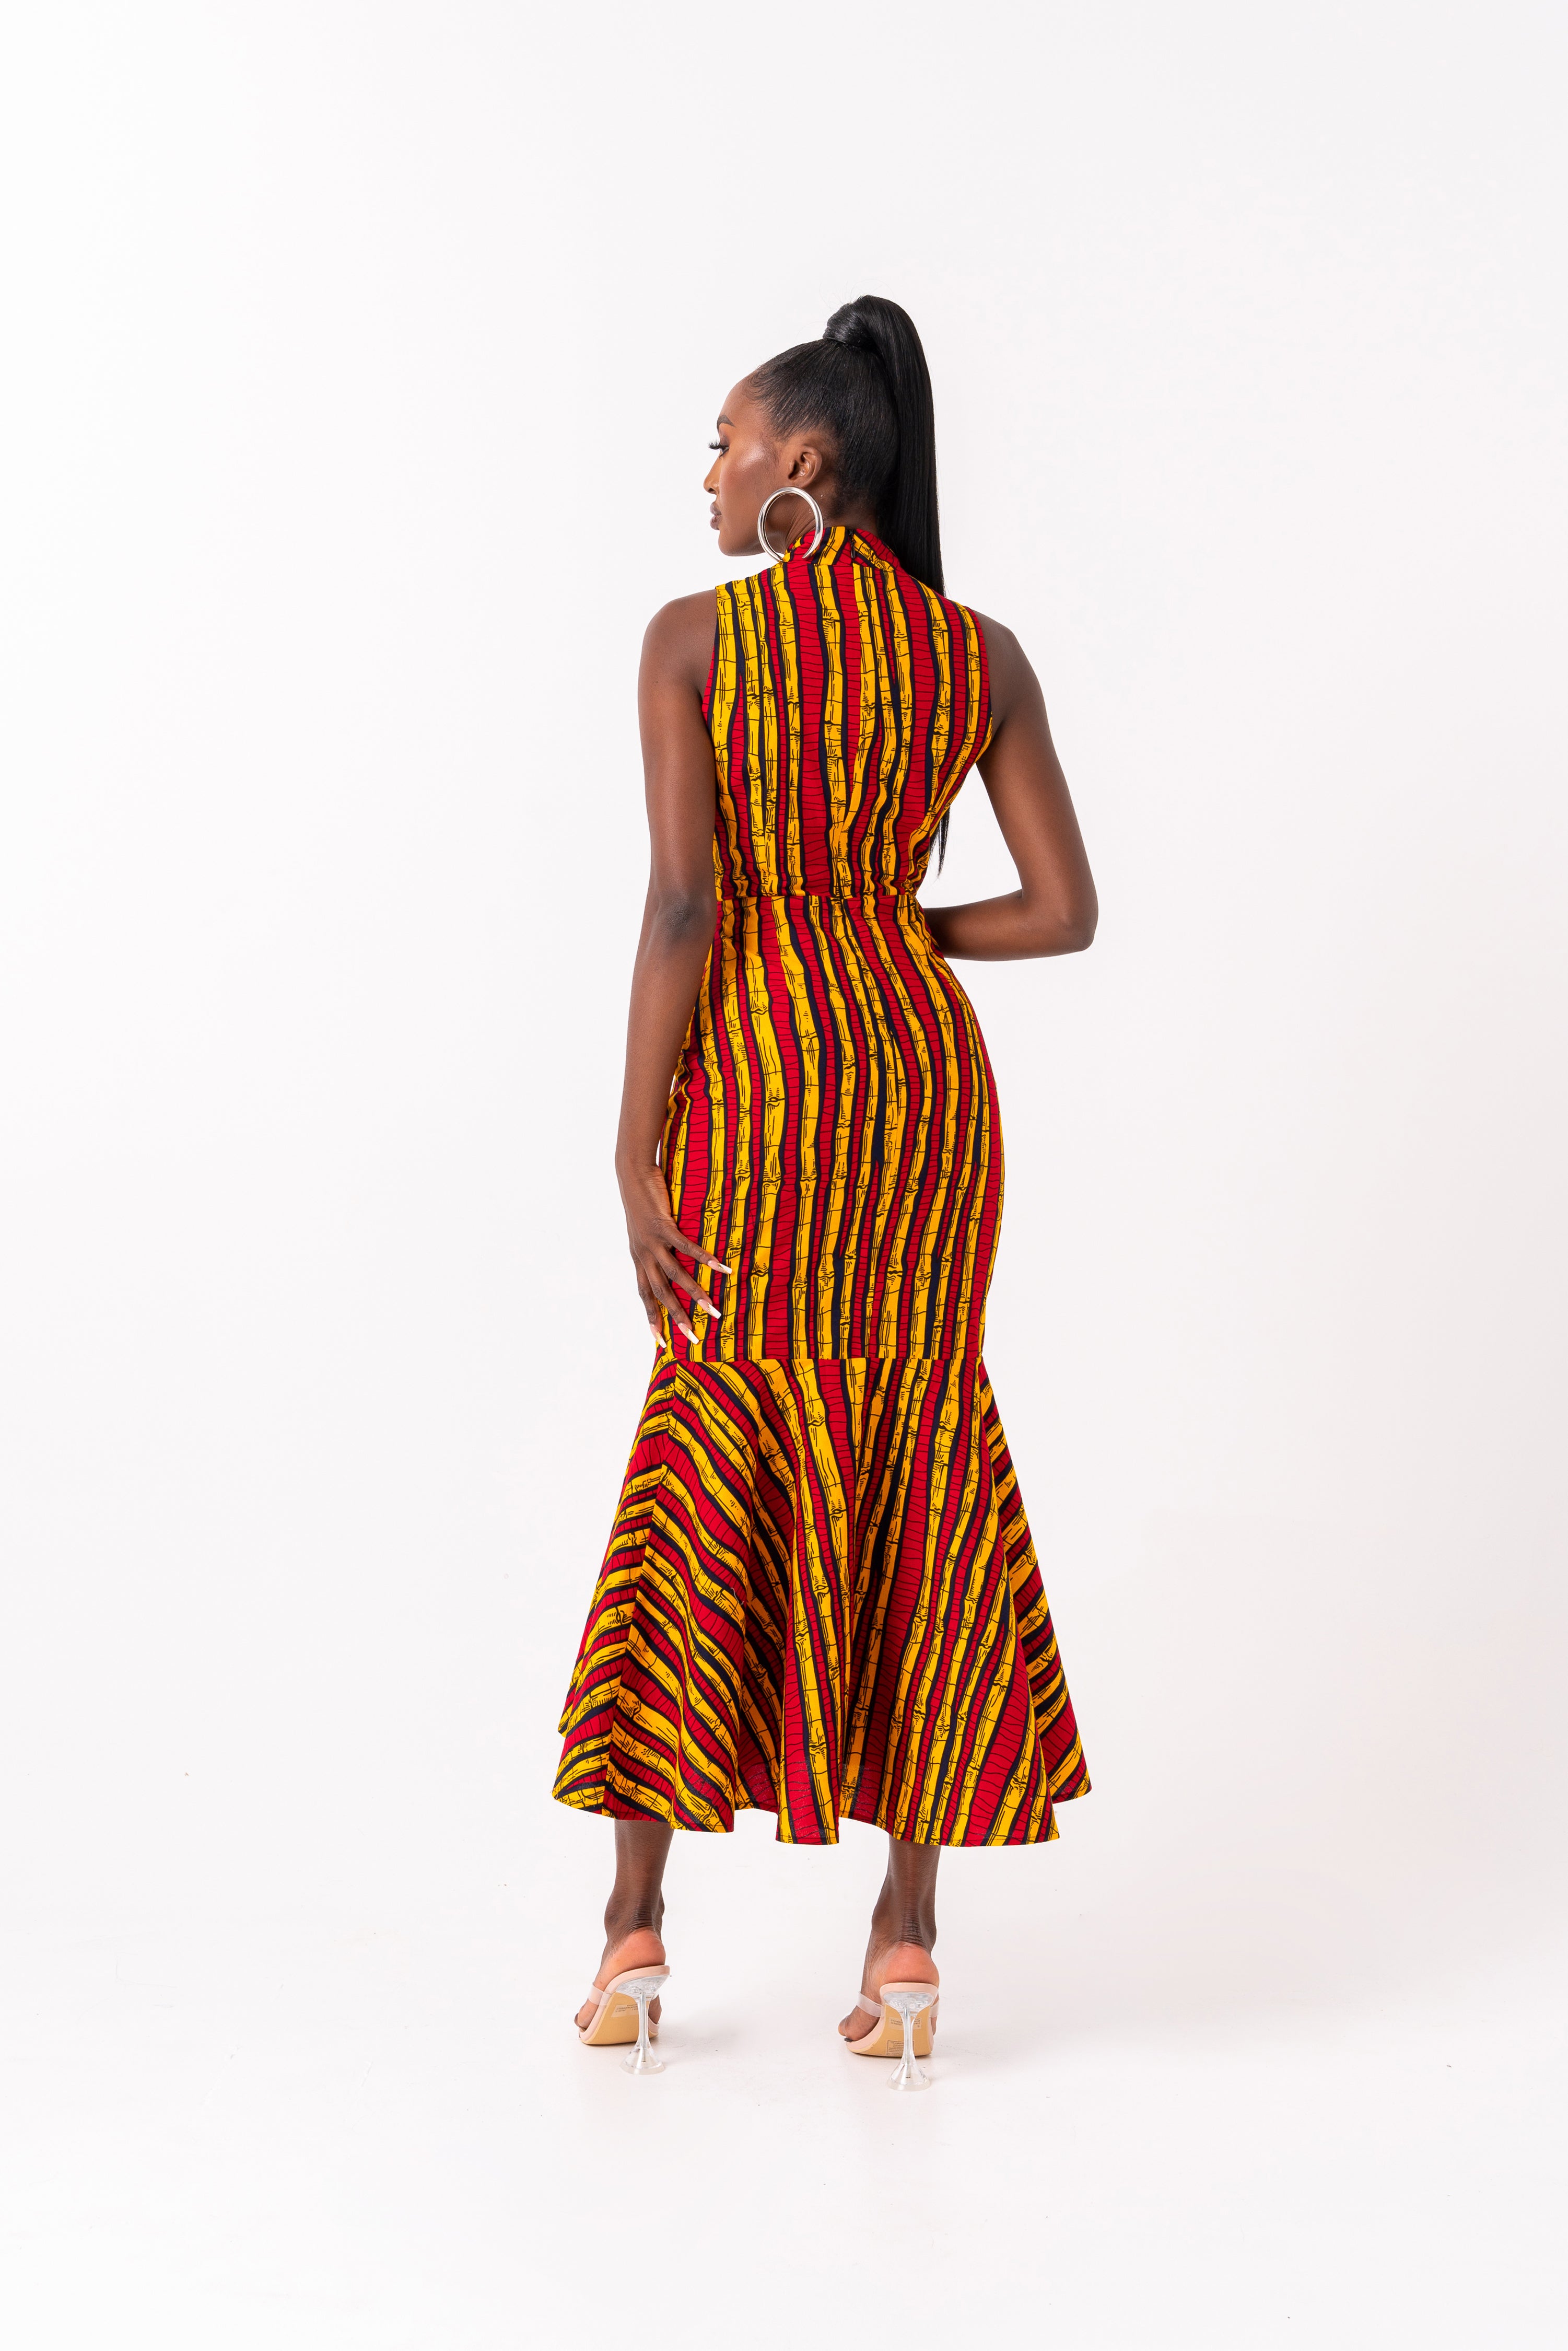 RITA African Print Maxi Mock Neck Peplum Dress